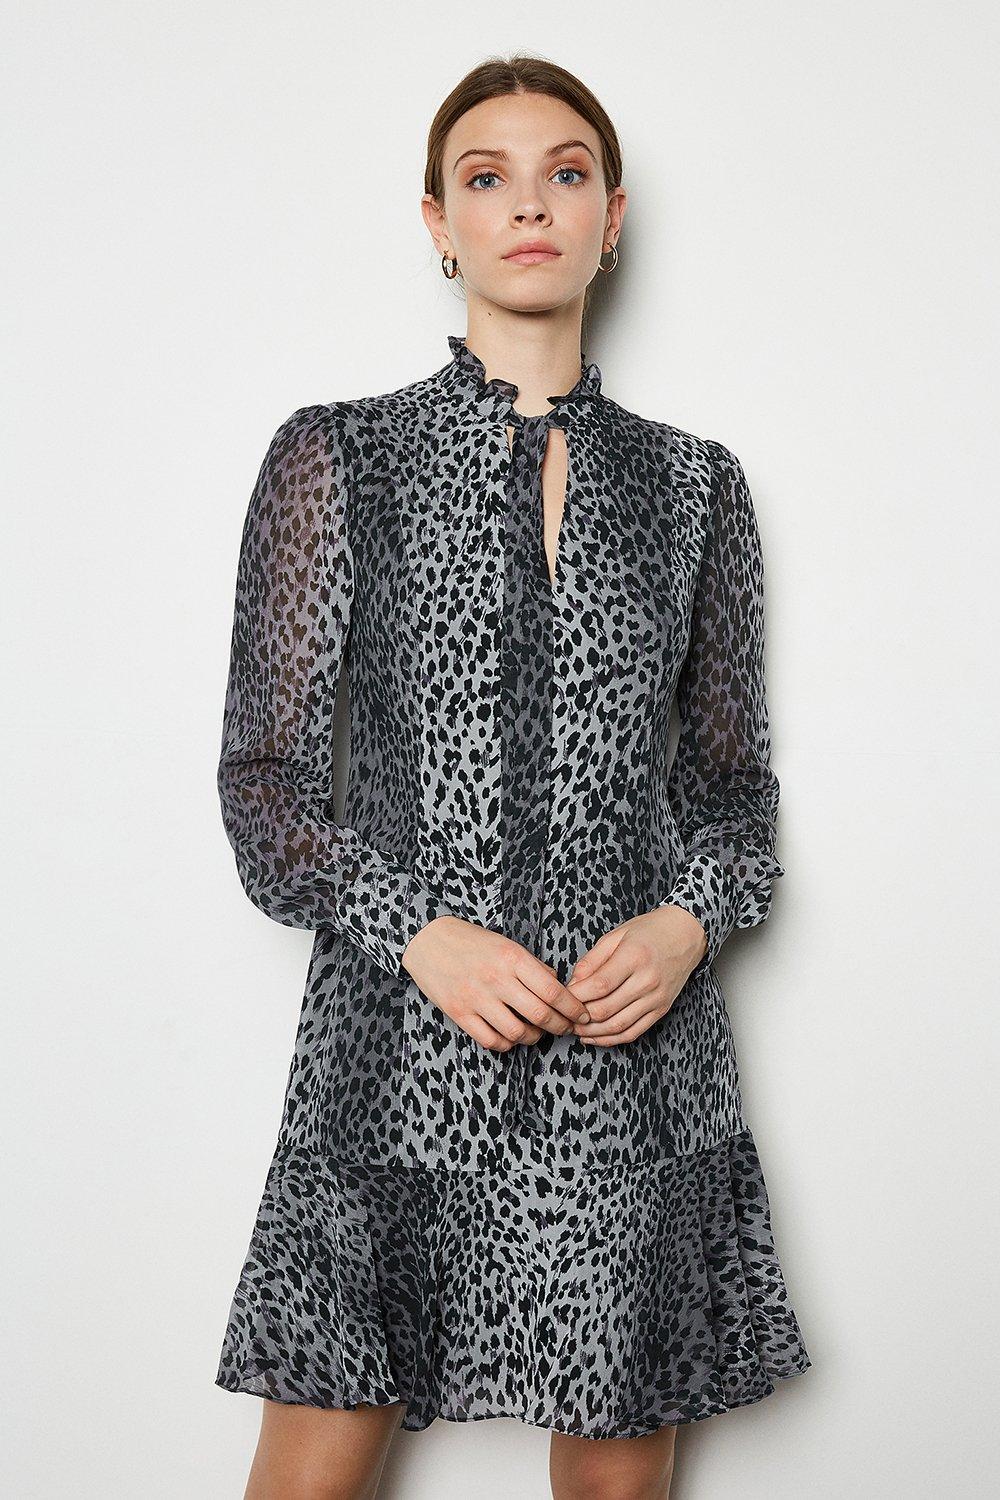 multi coloured leopard print dress